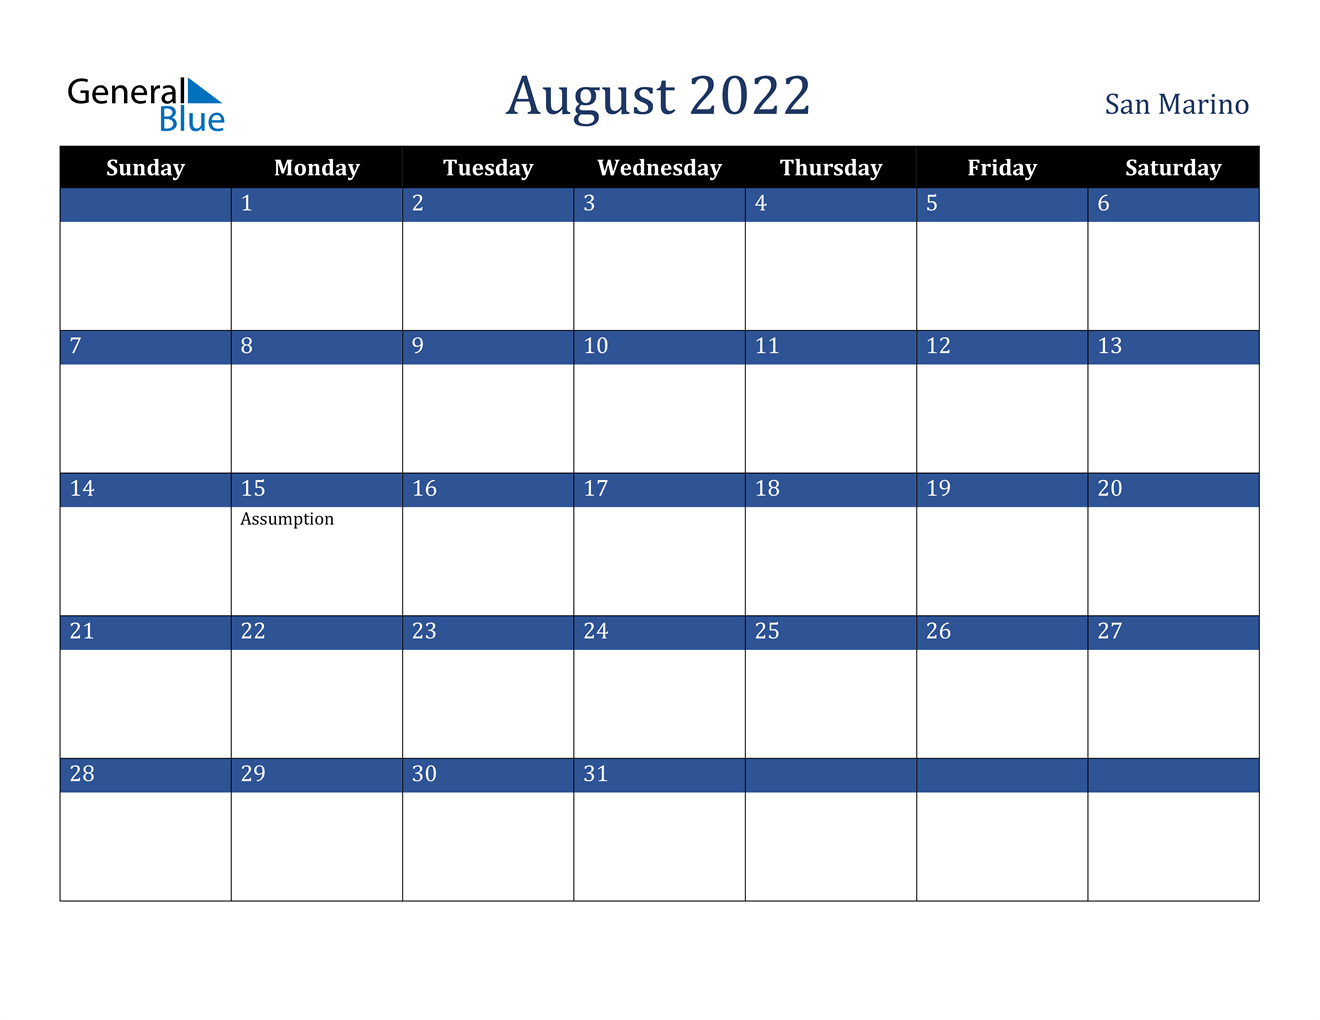 August 2022 Calendar - San Marino